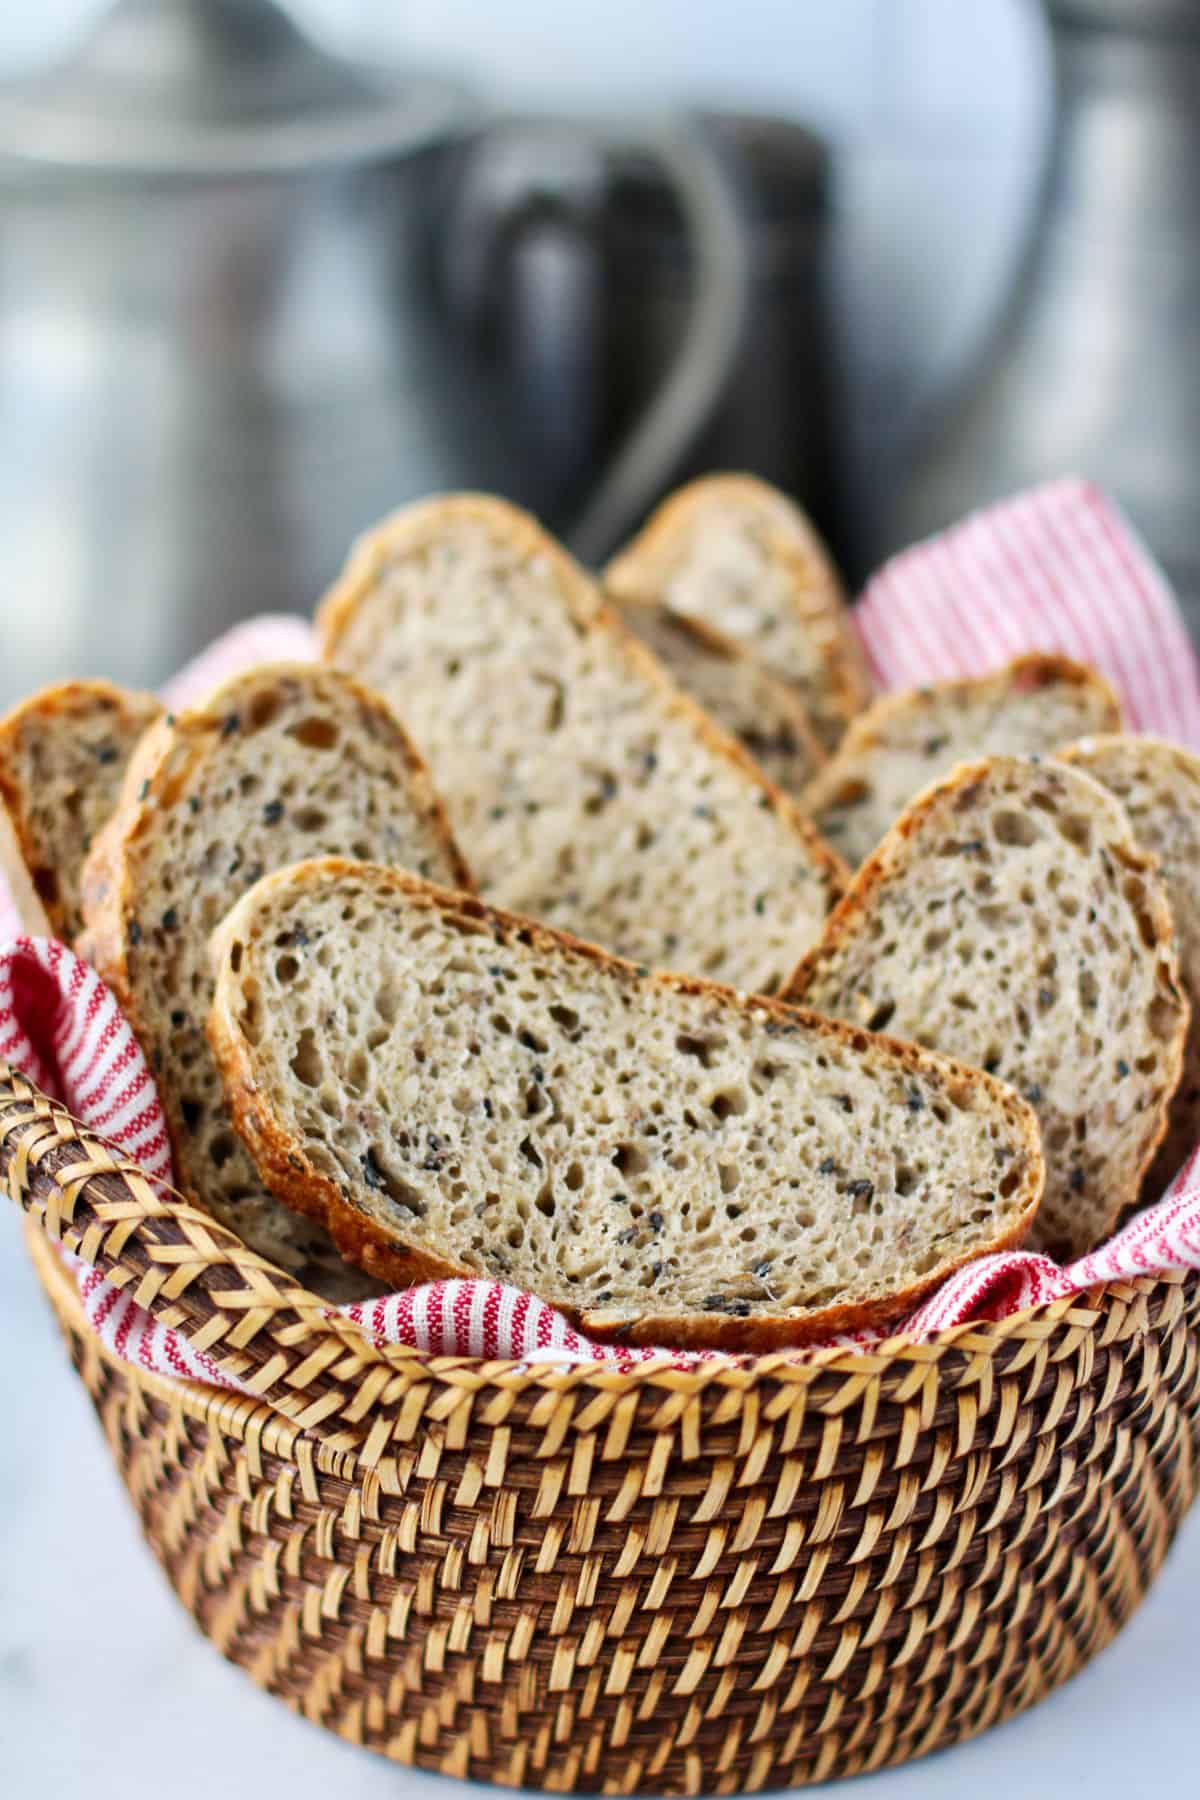 Rustic Multigrain Bread sliced in a basket.